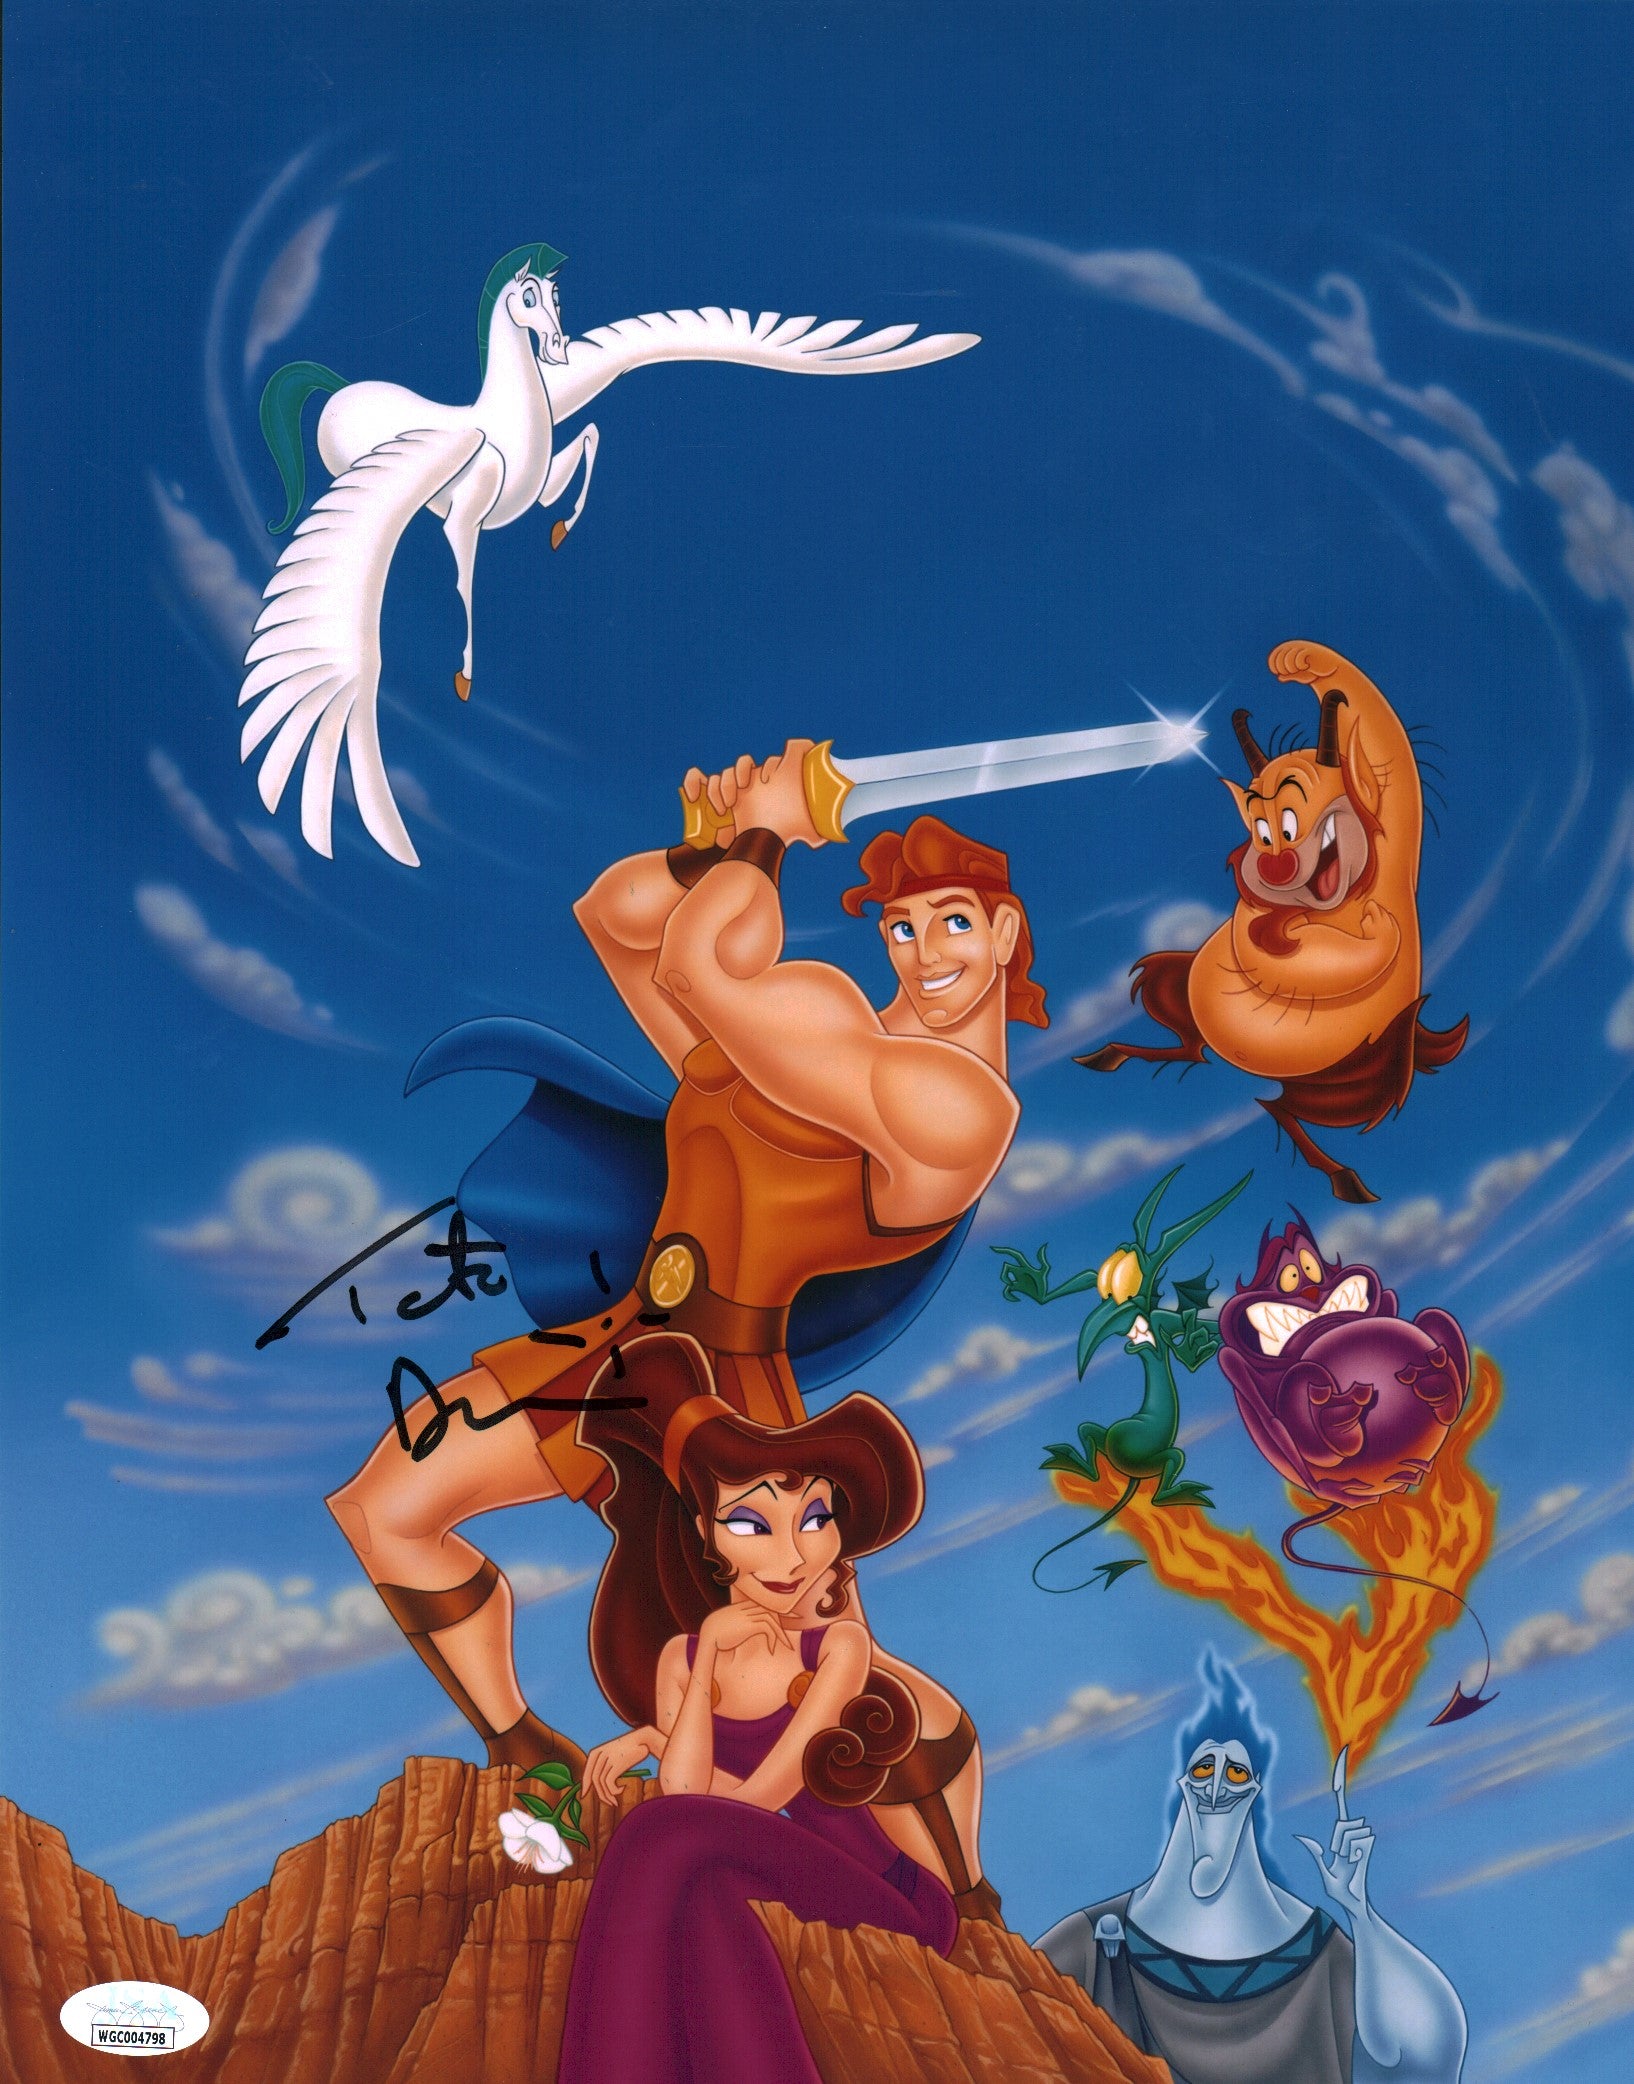 Tate Donovan Disney Hercules 11x14 Photo Poster Signed Autograph JSA Certified COA GalaxyCon